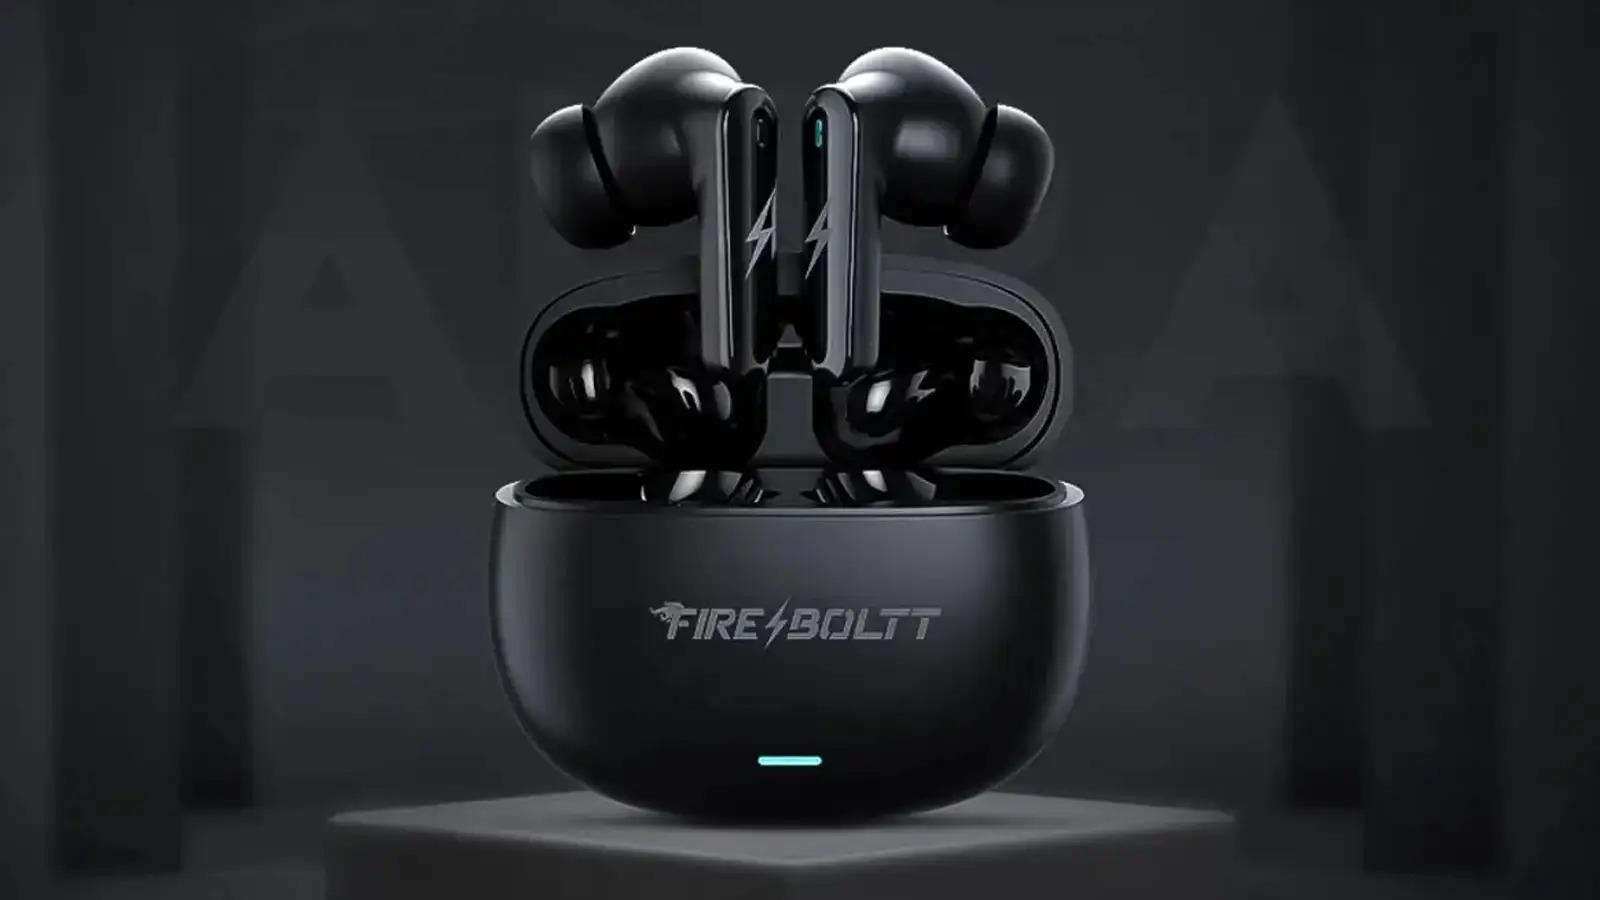 Fire-Boltt Fire Pods Aura Earbuds : लांच हुए 7 कलर में 40 घंटे चलने वाले ईयरबड्स, कीमत 999 रुपये 